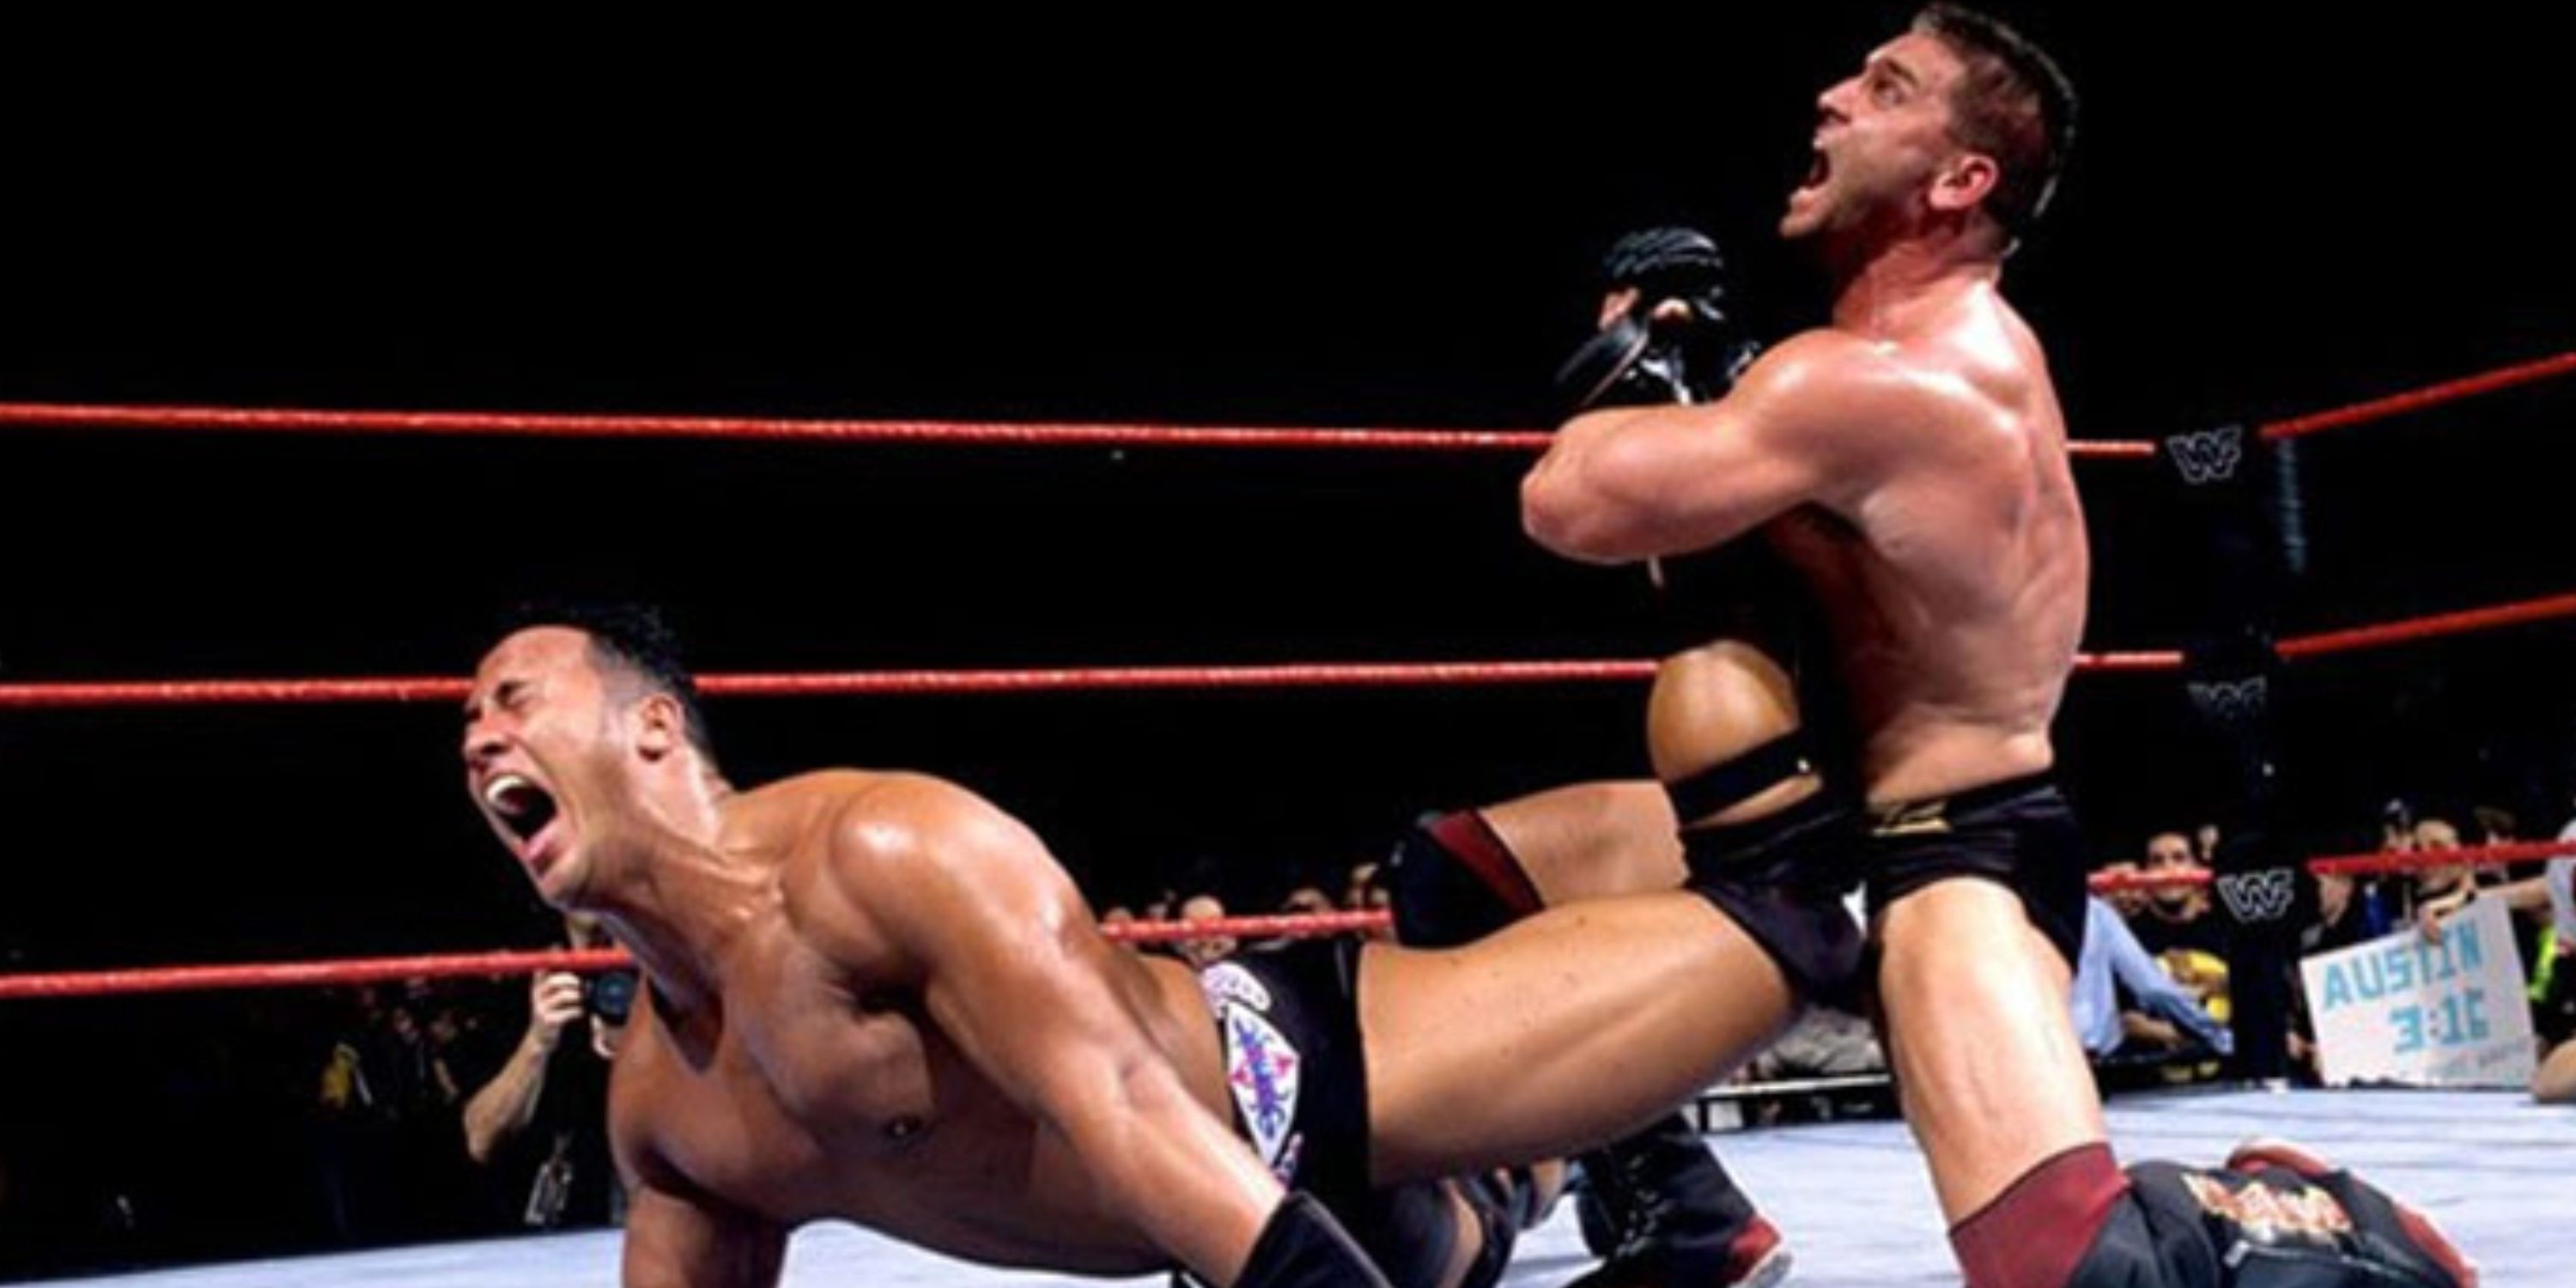 The Rock vs Ken Shamrock at WrestleMania 14